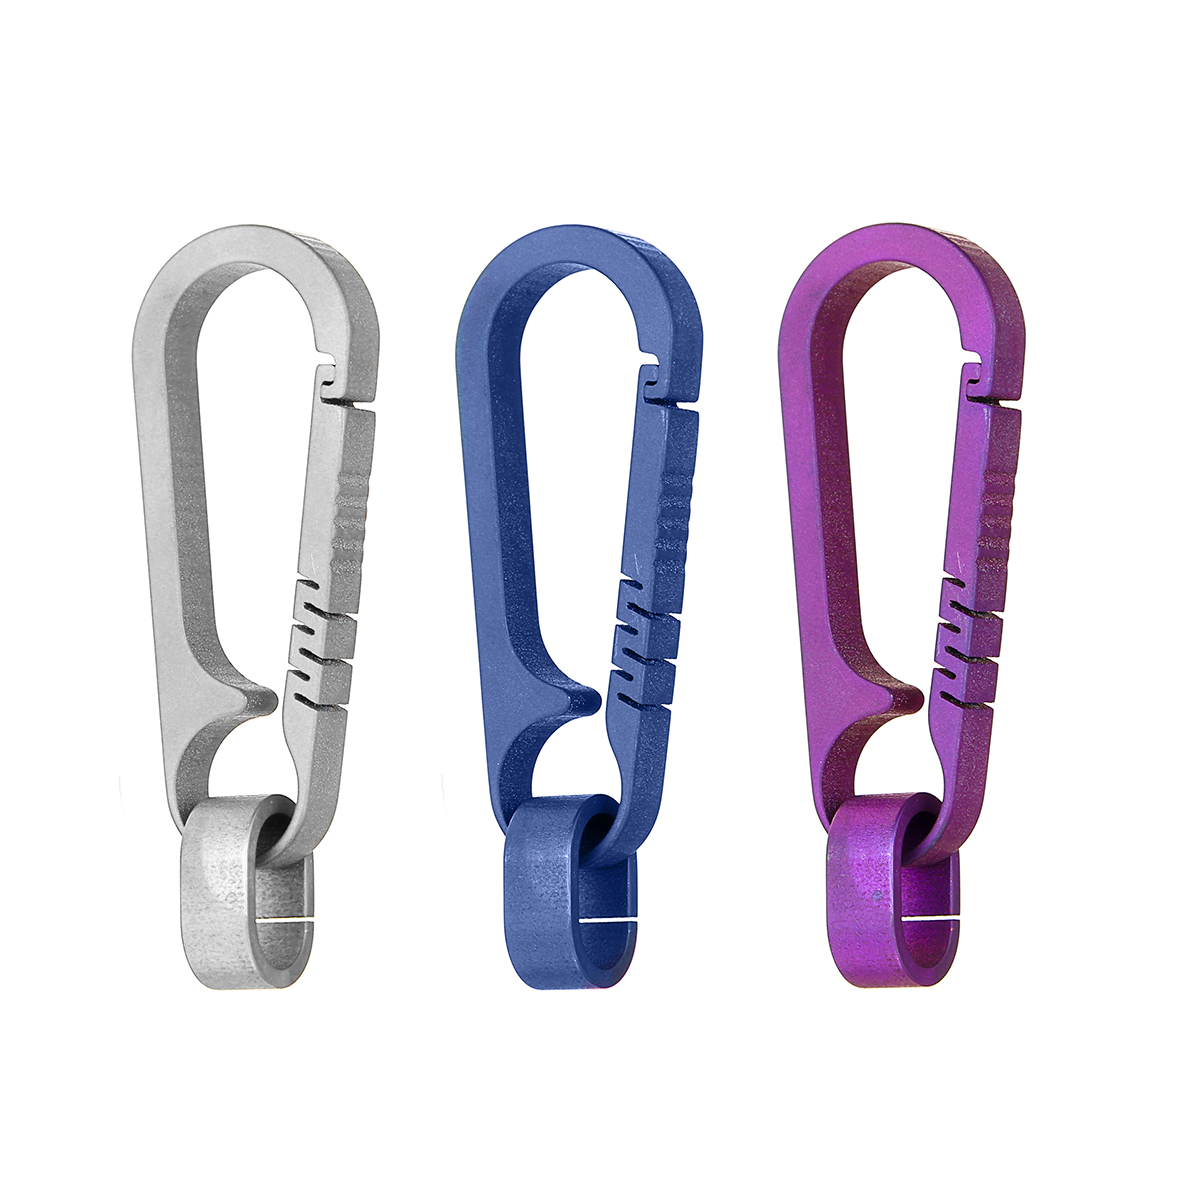 Titanium Keychain Key Ring Lightweight Hanging Buckle Outdoor Pocket Carabiner